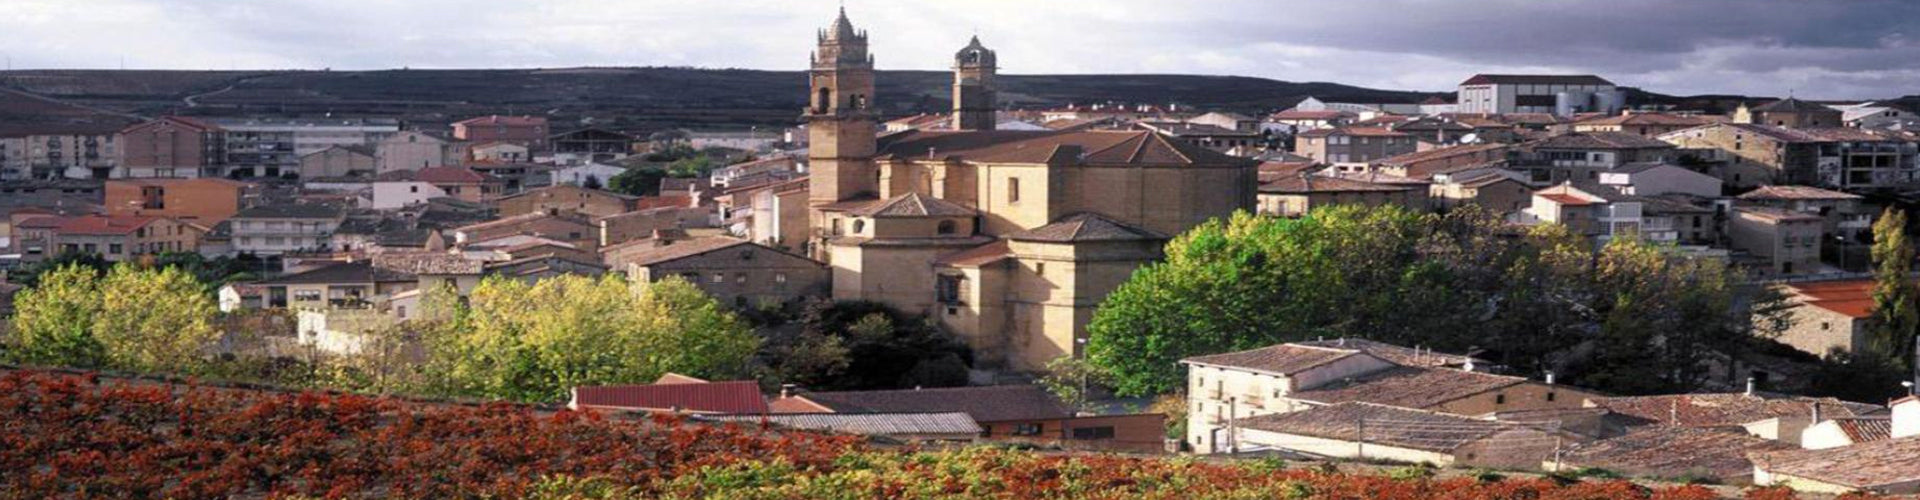 Bodegas Viña Eguía in Elciego, Spain